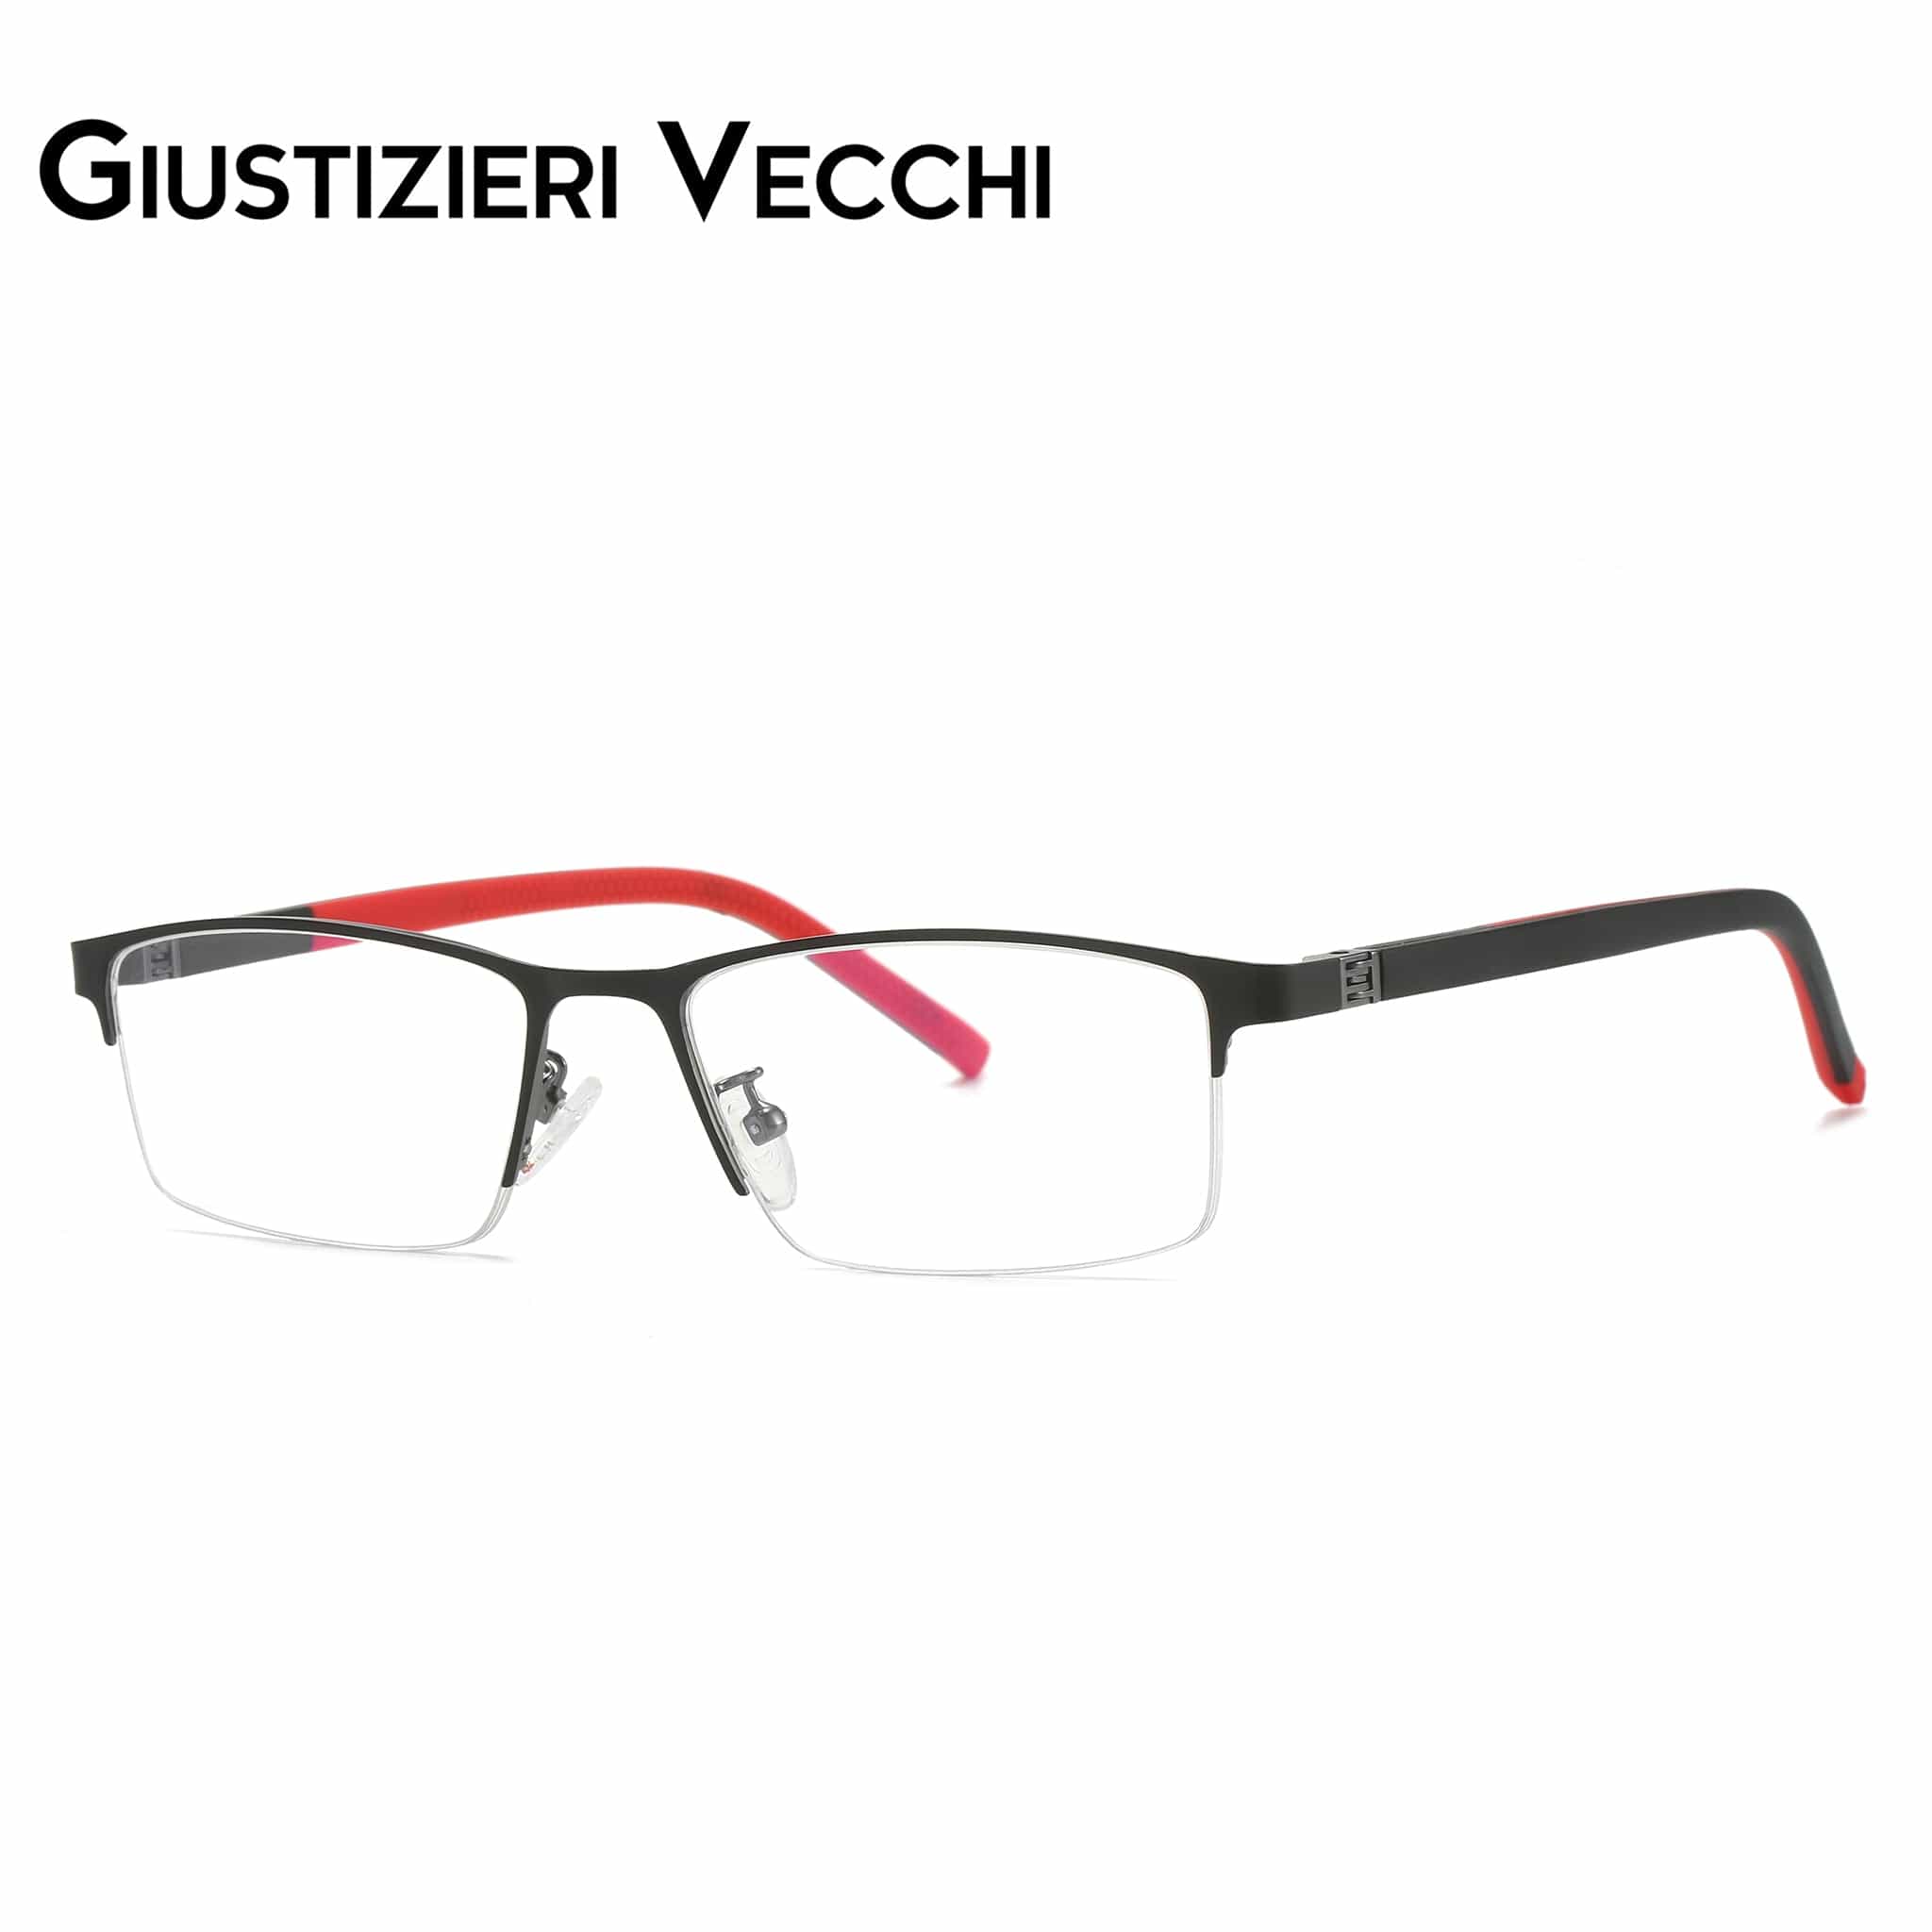 GIUSTIZIERI VECCHI Eyeglasses HydroFlash Uno